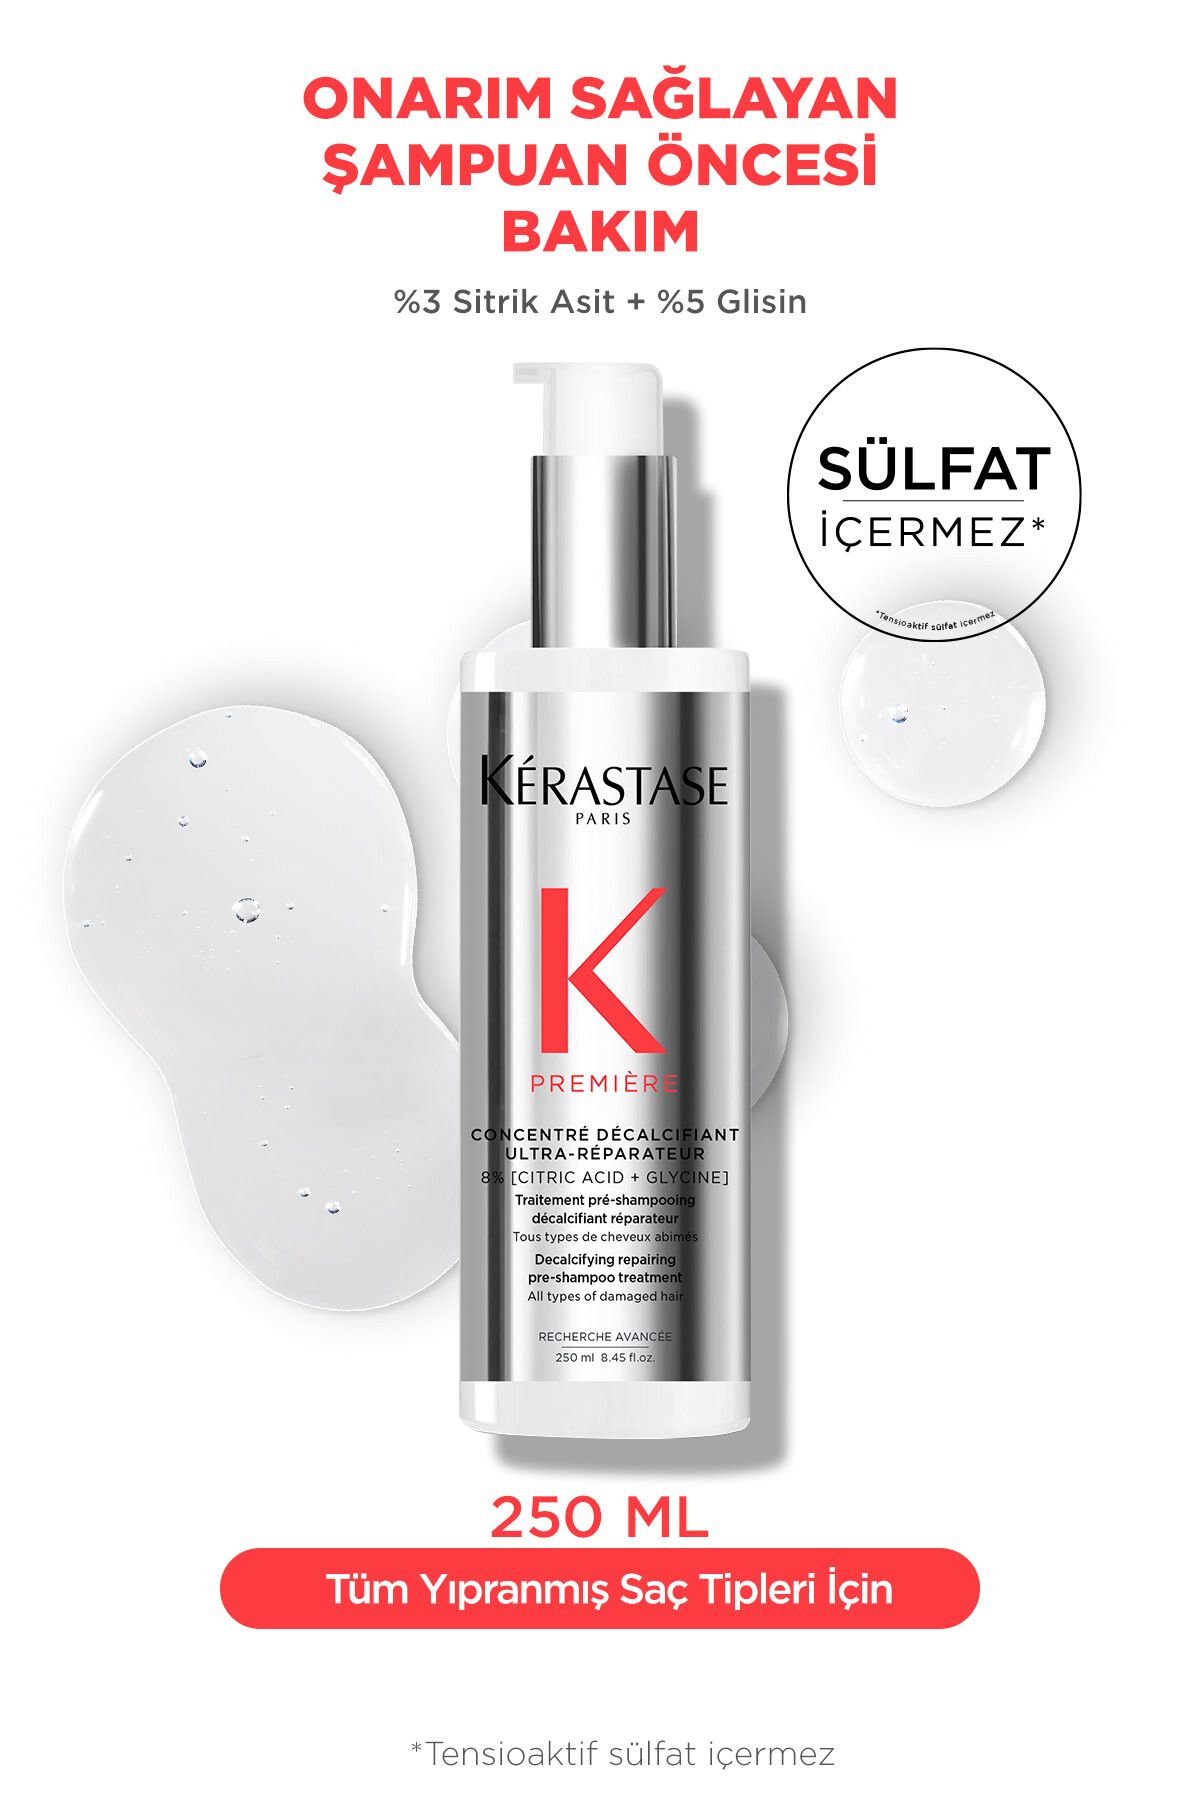 Kerastase Premiere Concentre Decalcifiant Ultra-reparateur Onarım Sağlayan Şampuan Öncesi Bakım 250m